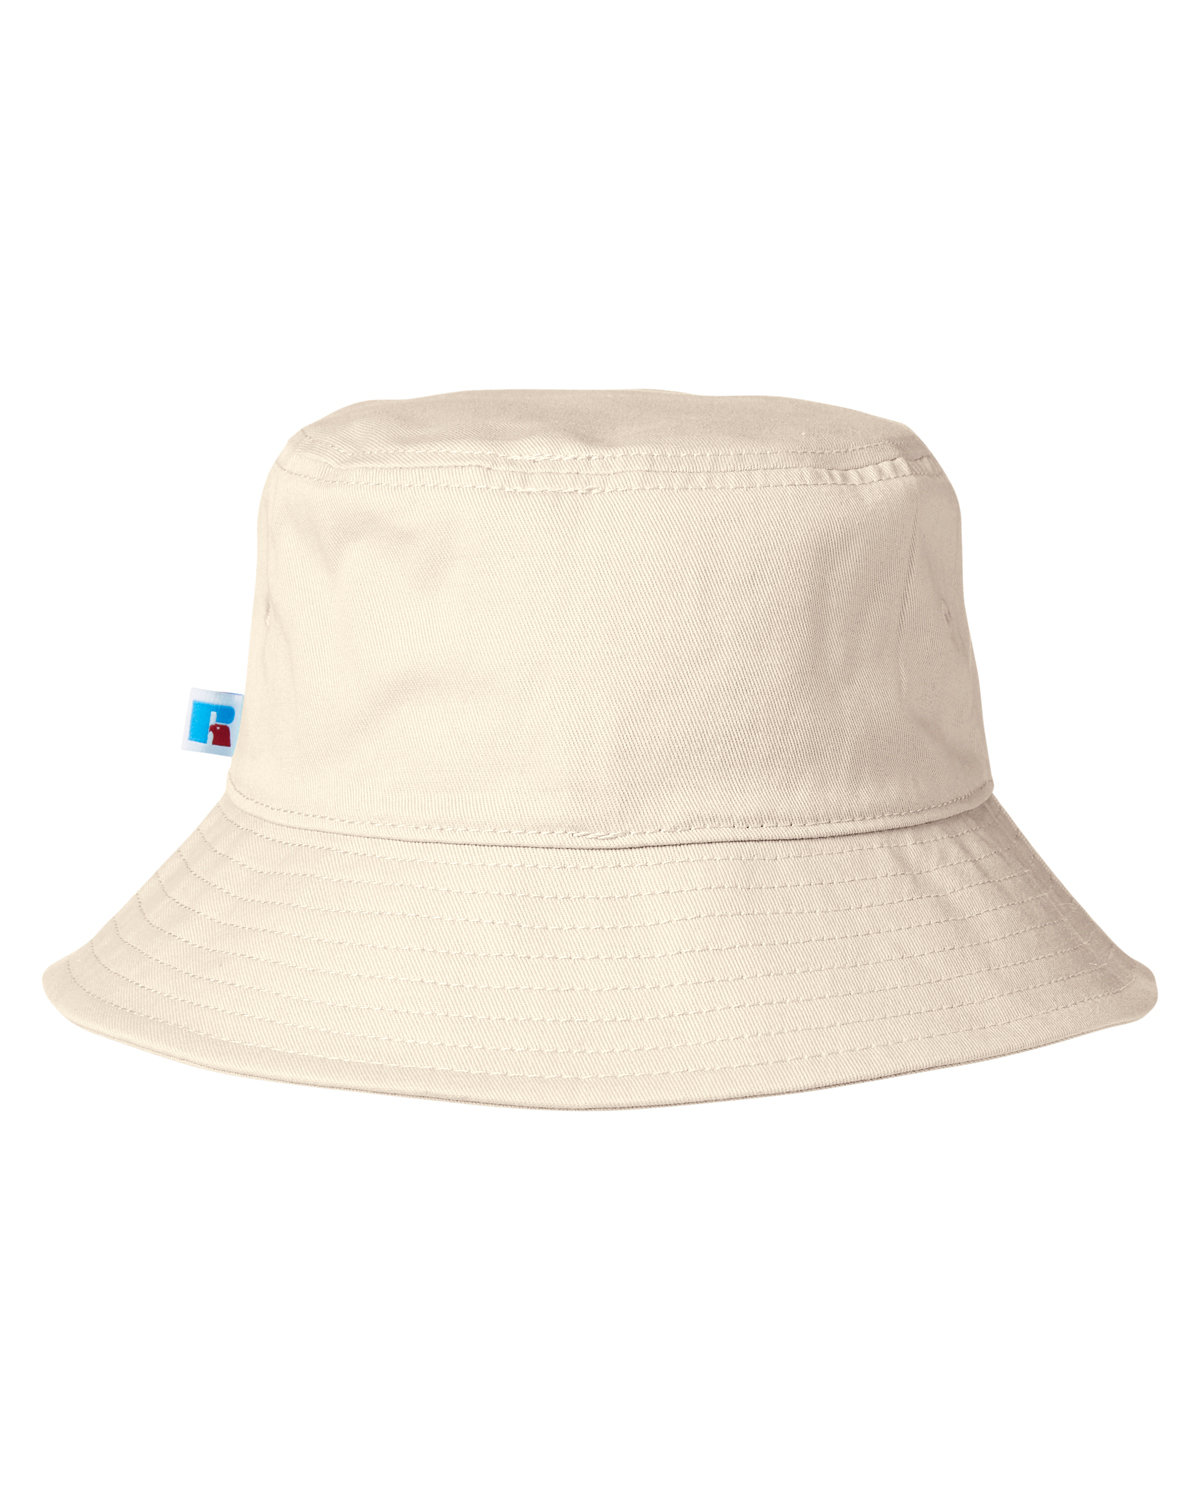 The Palmetto Bucket - Golf Hat